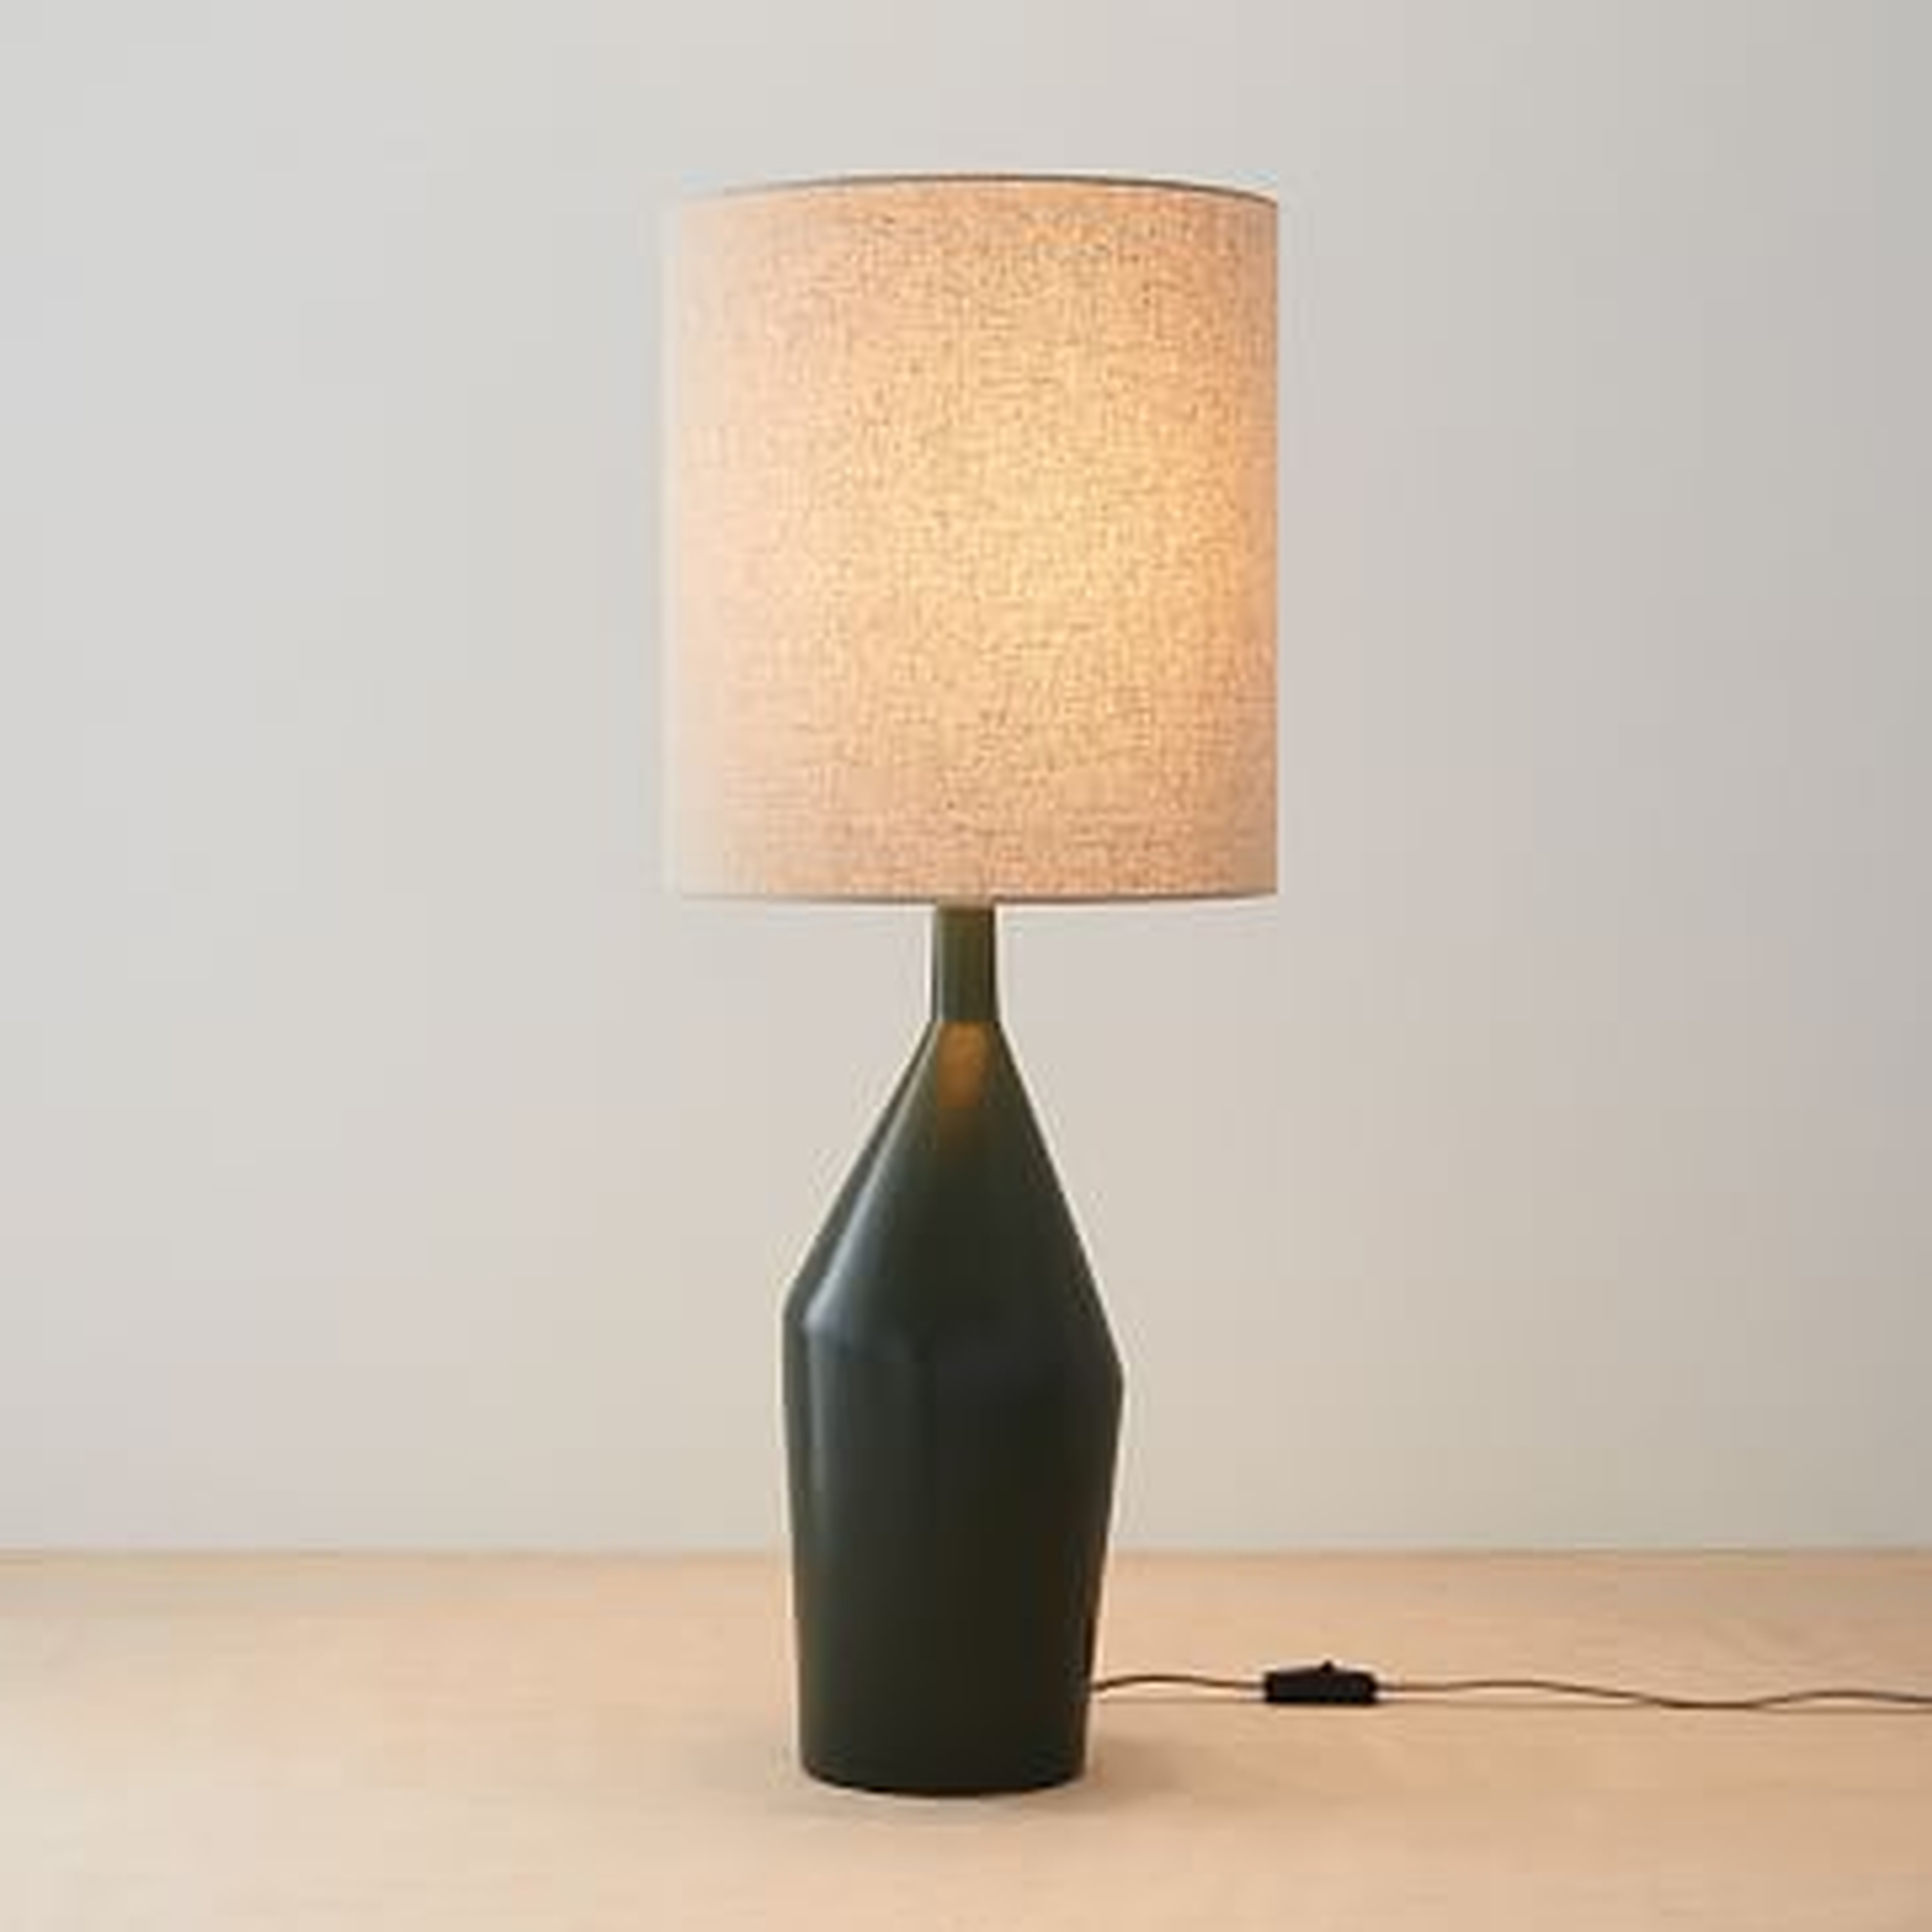 Asymmetry Ceramic Table Lamp, 30.5", Green, Set of 2 - West Elm